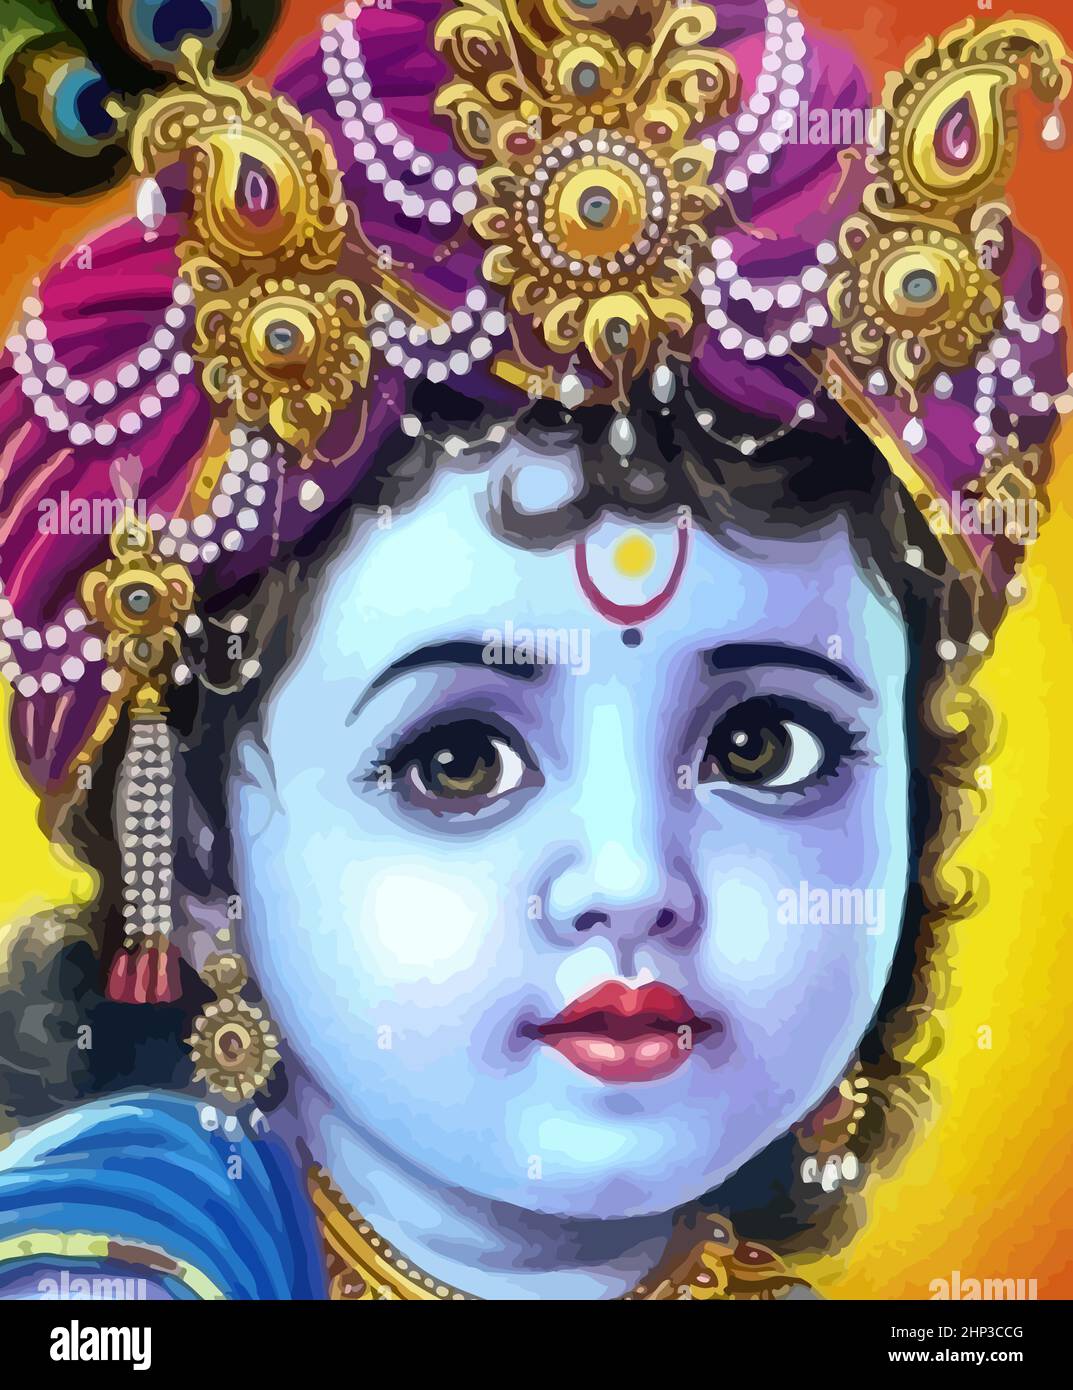 Shri krishna govinda hi-res stock photography and images - Alamy